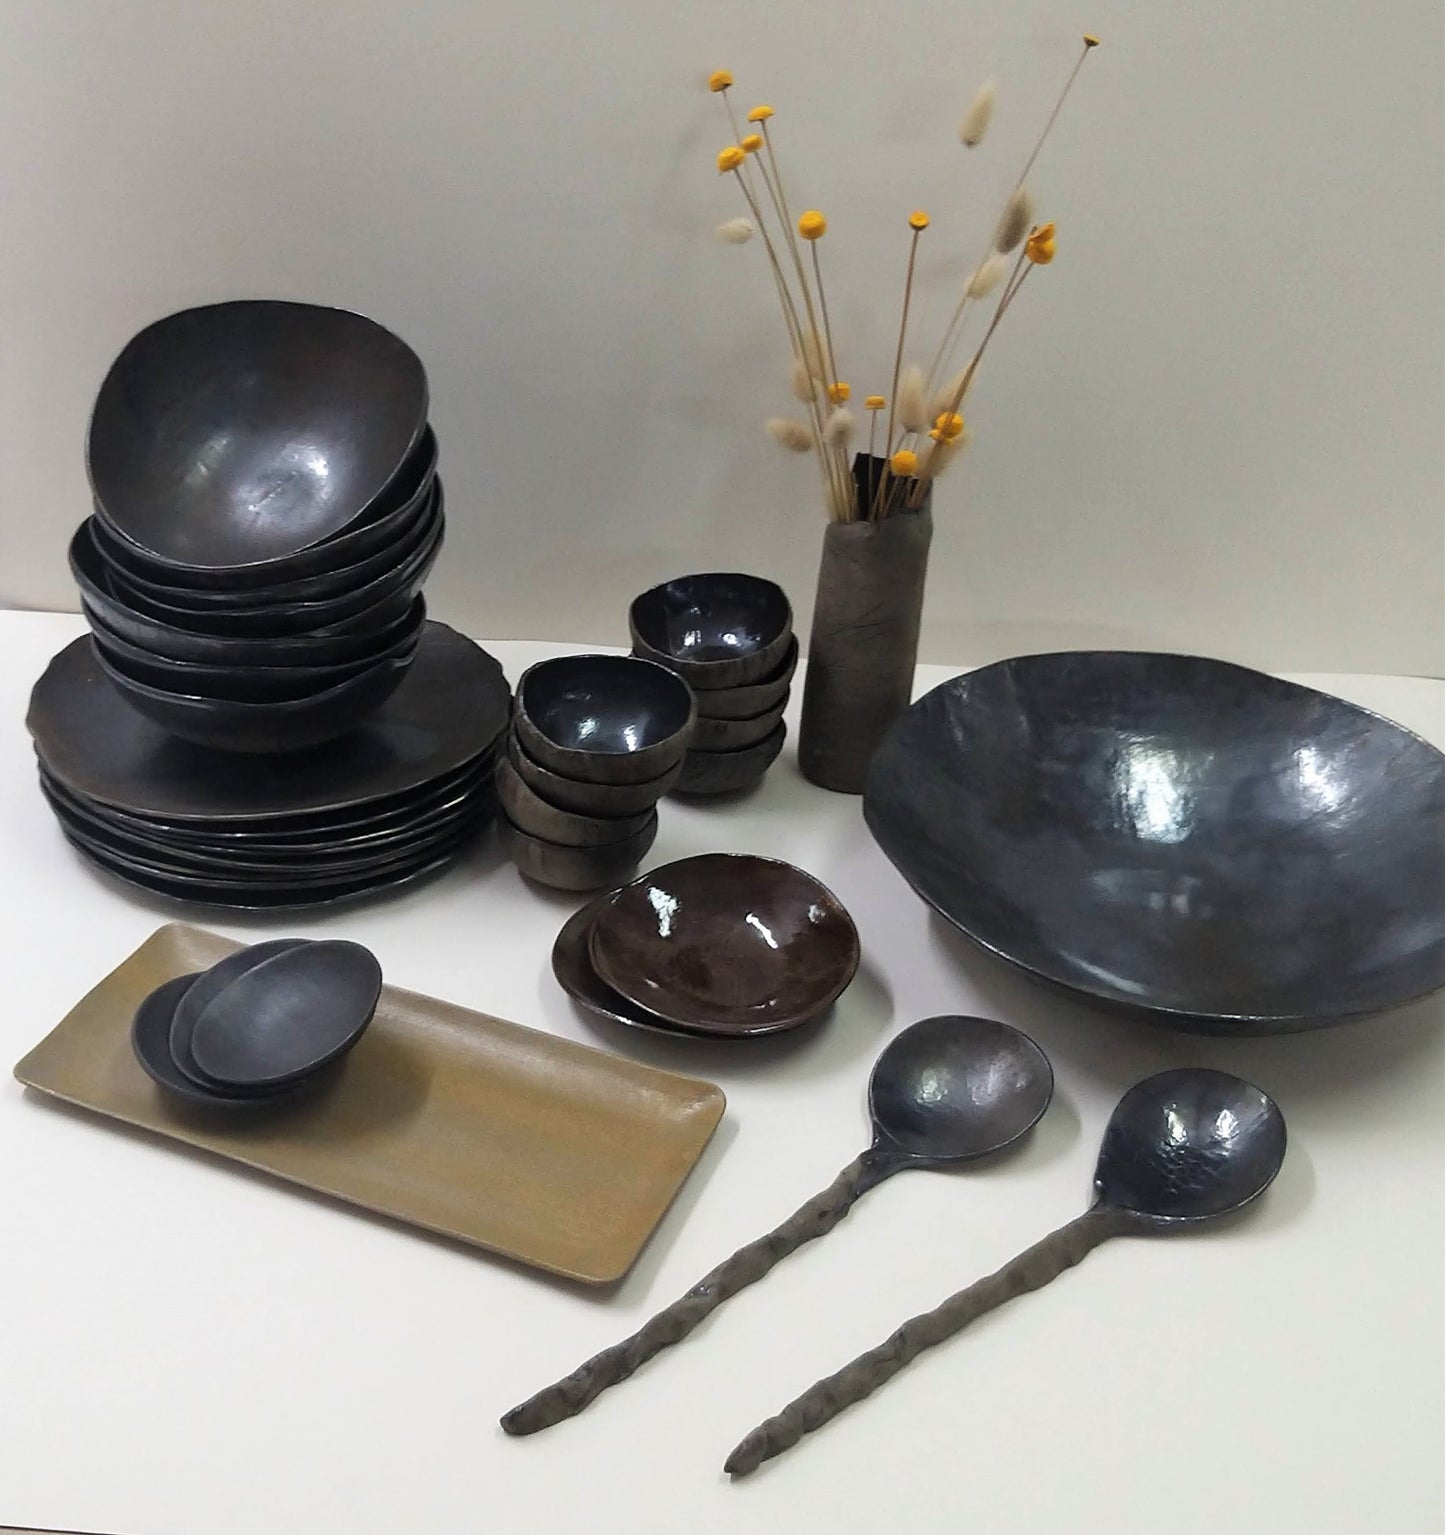 Stacks of black ceramic tableware